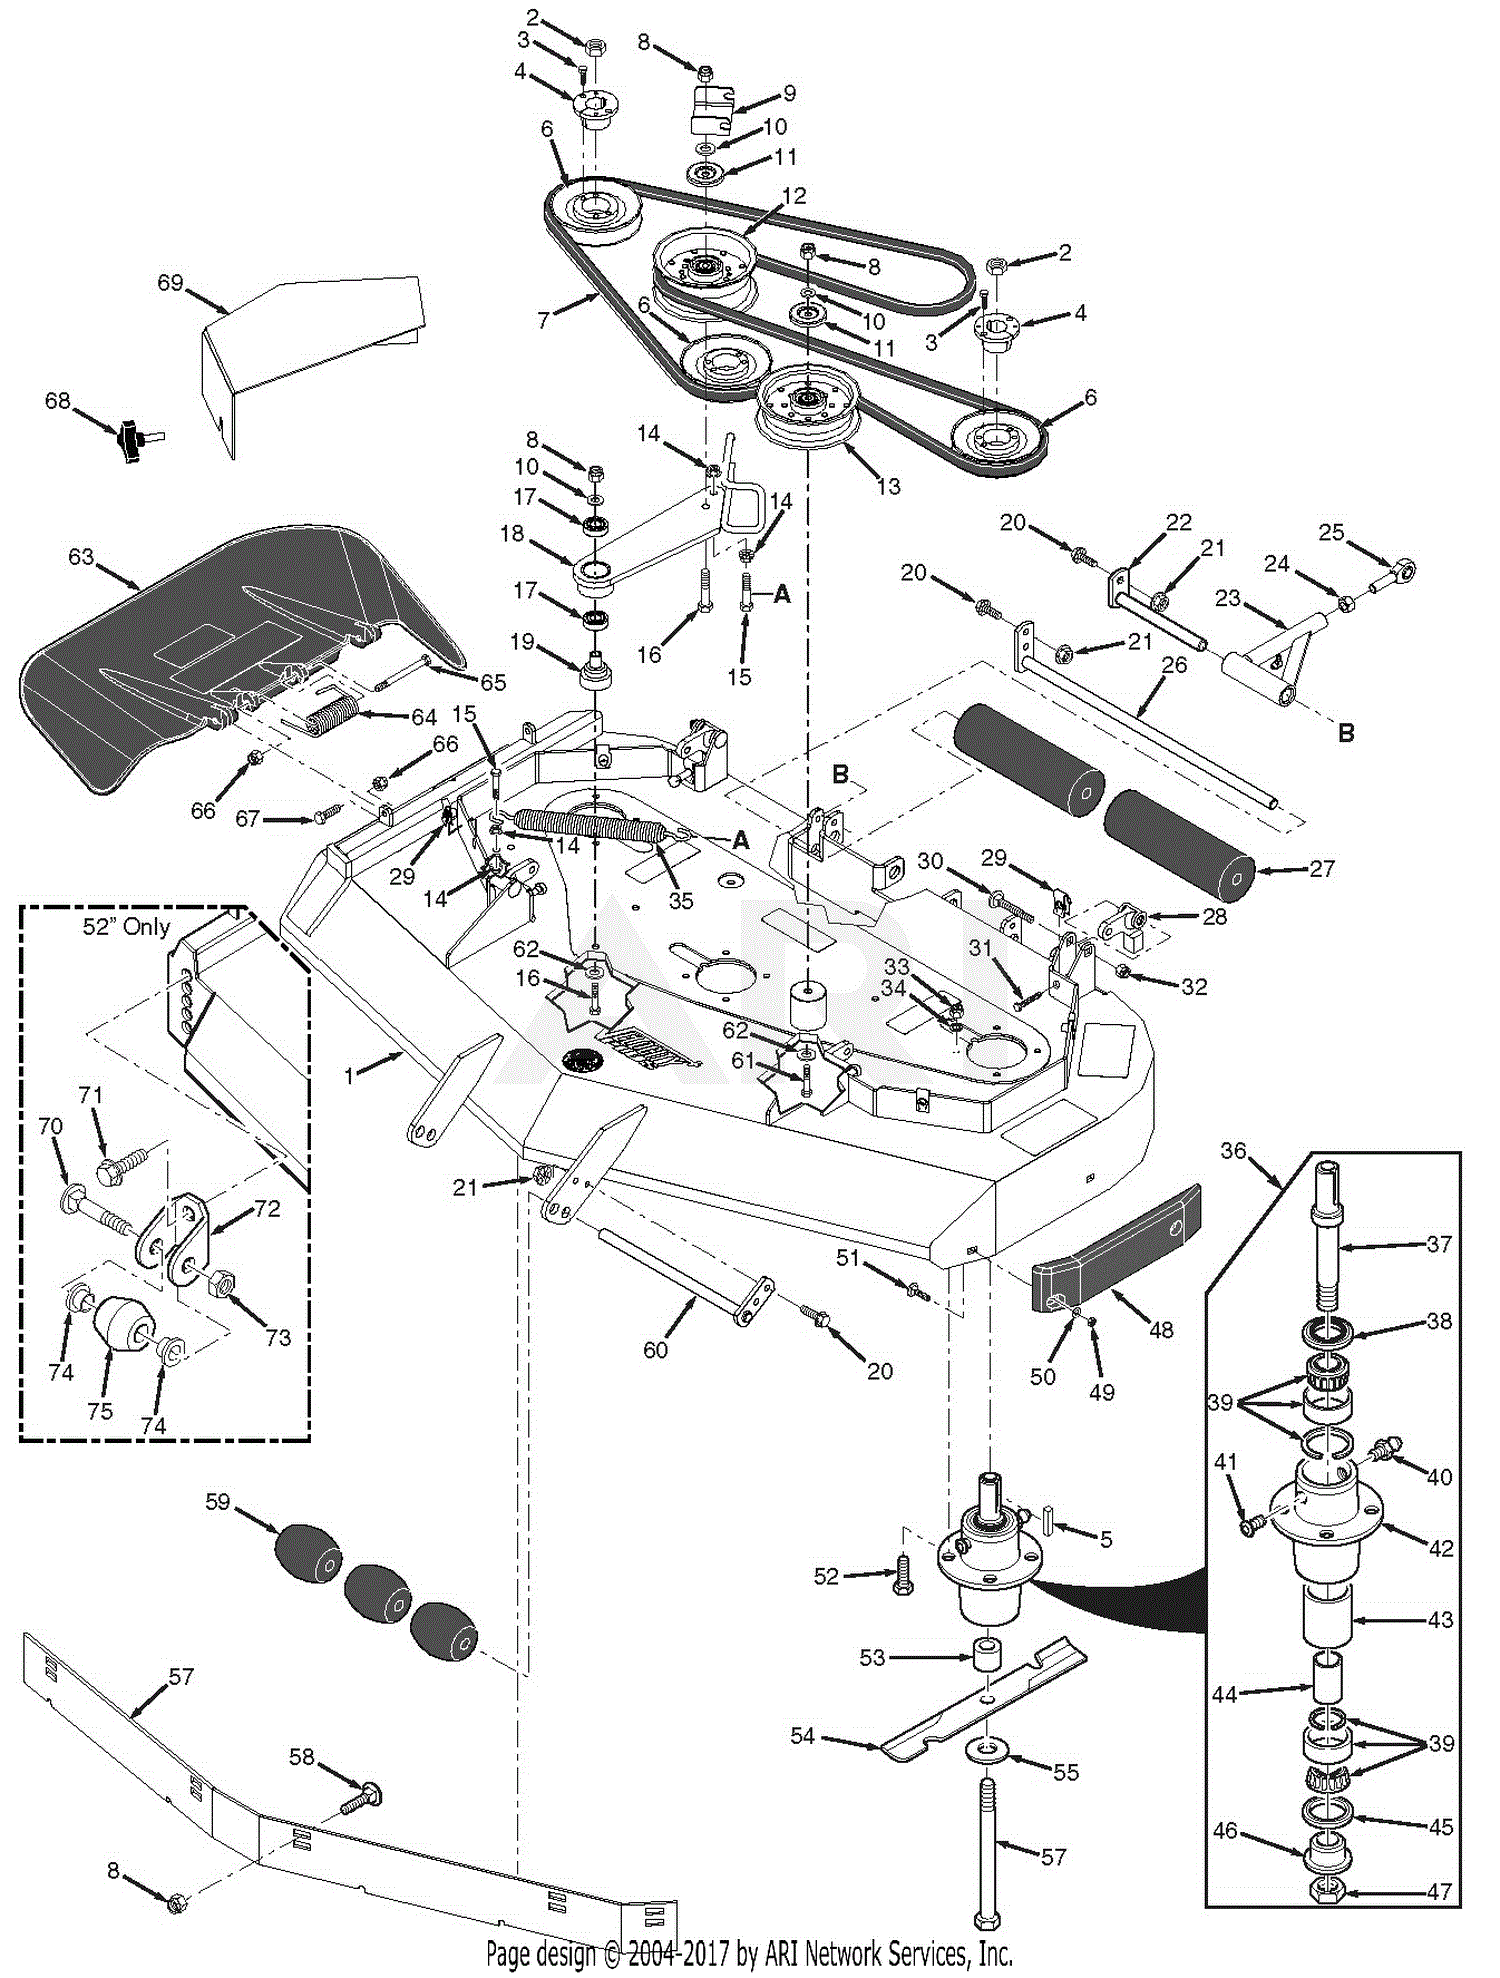 scag svr 52 wiring diagram